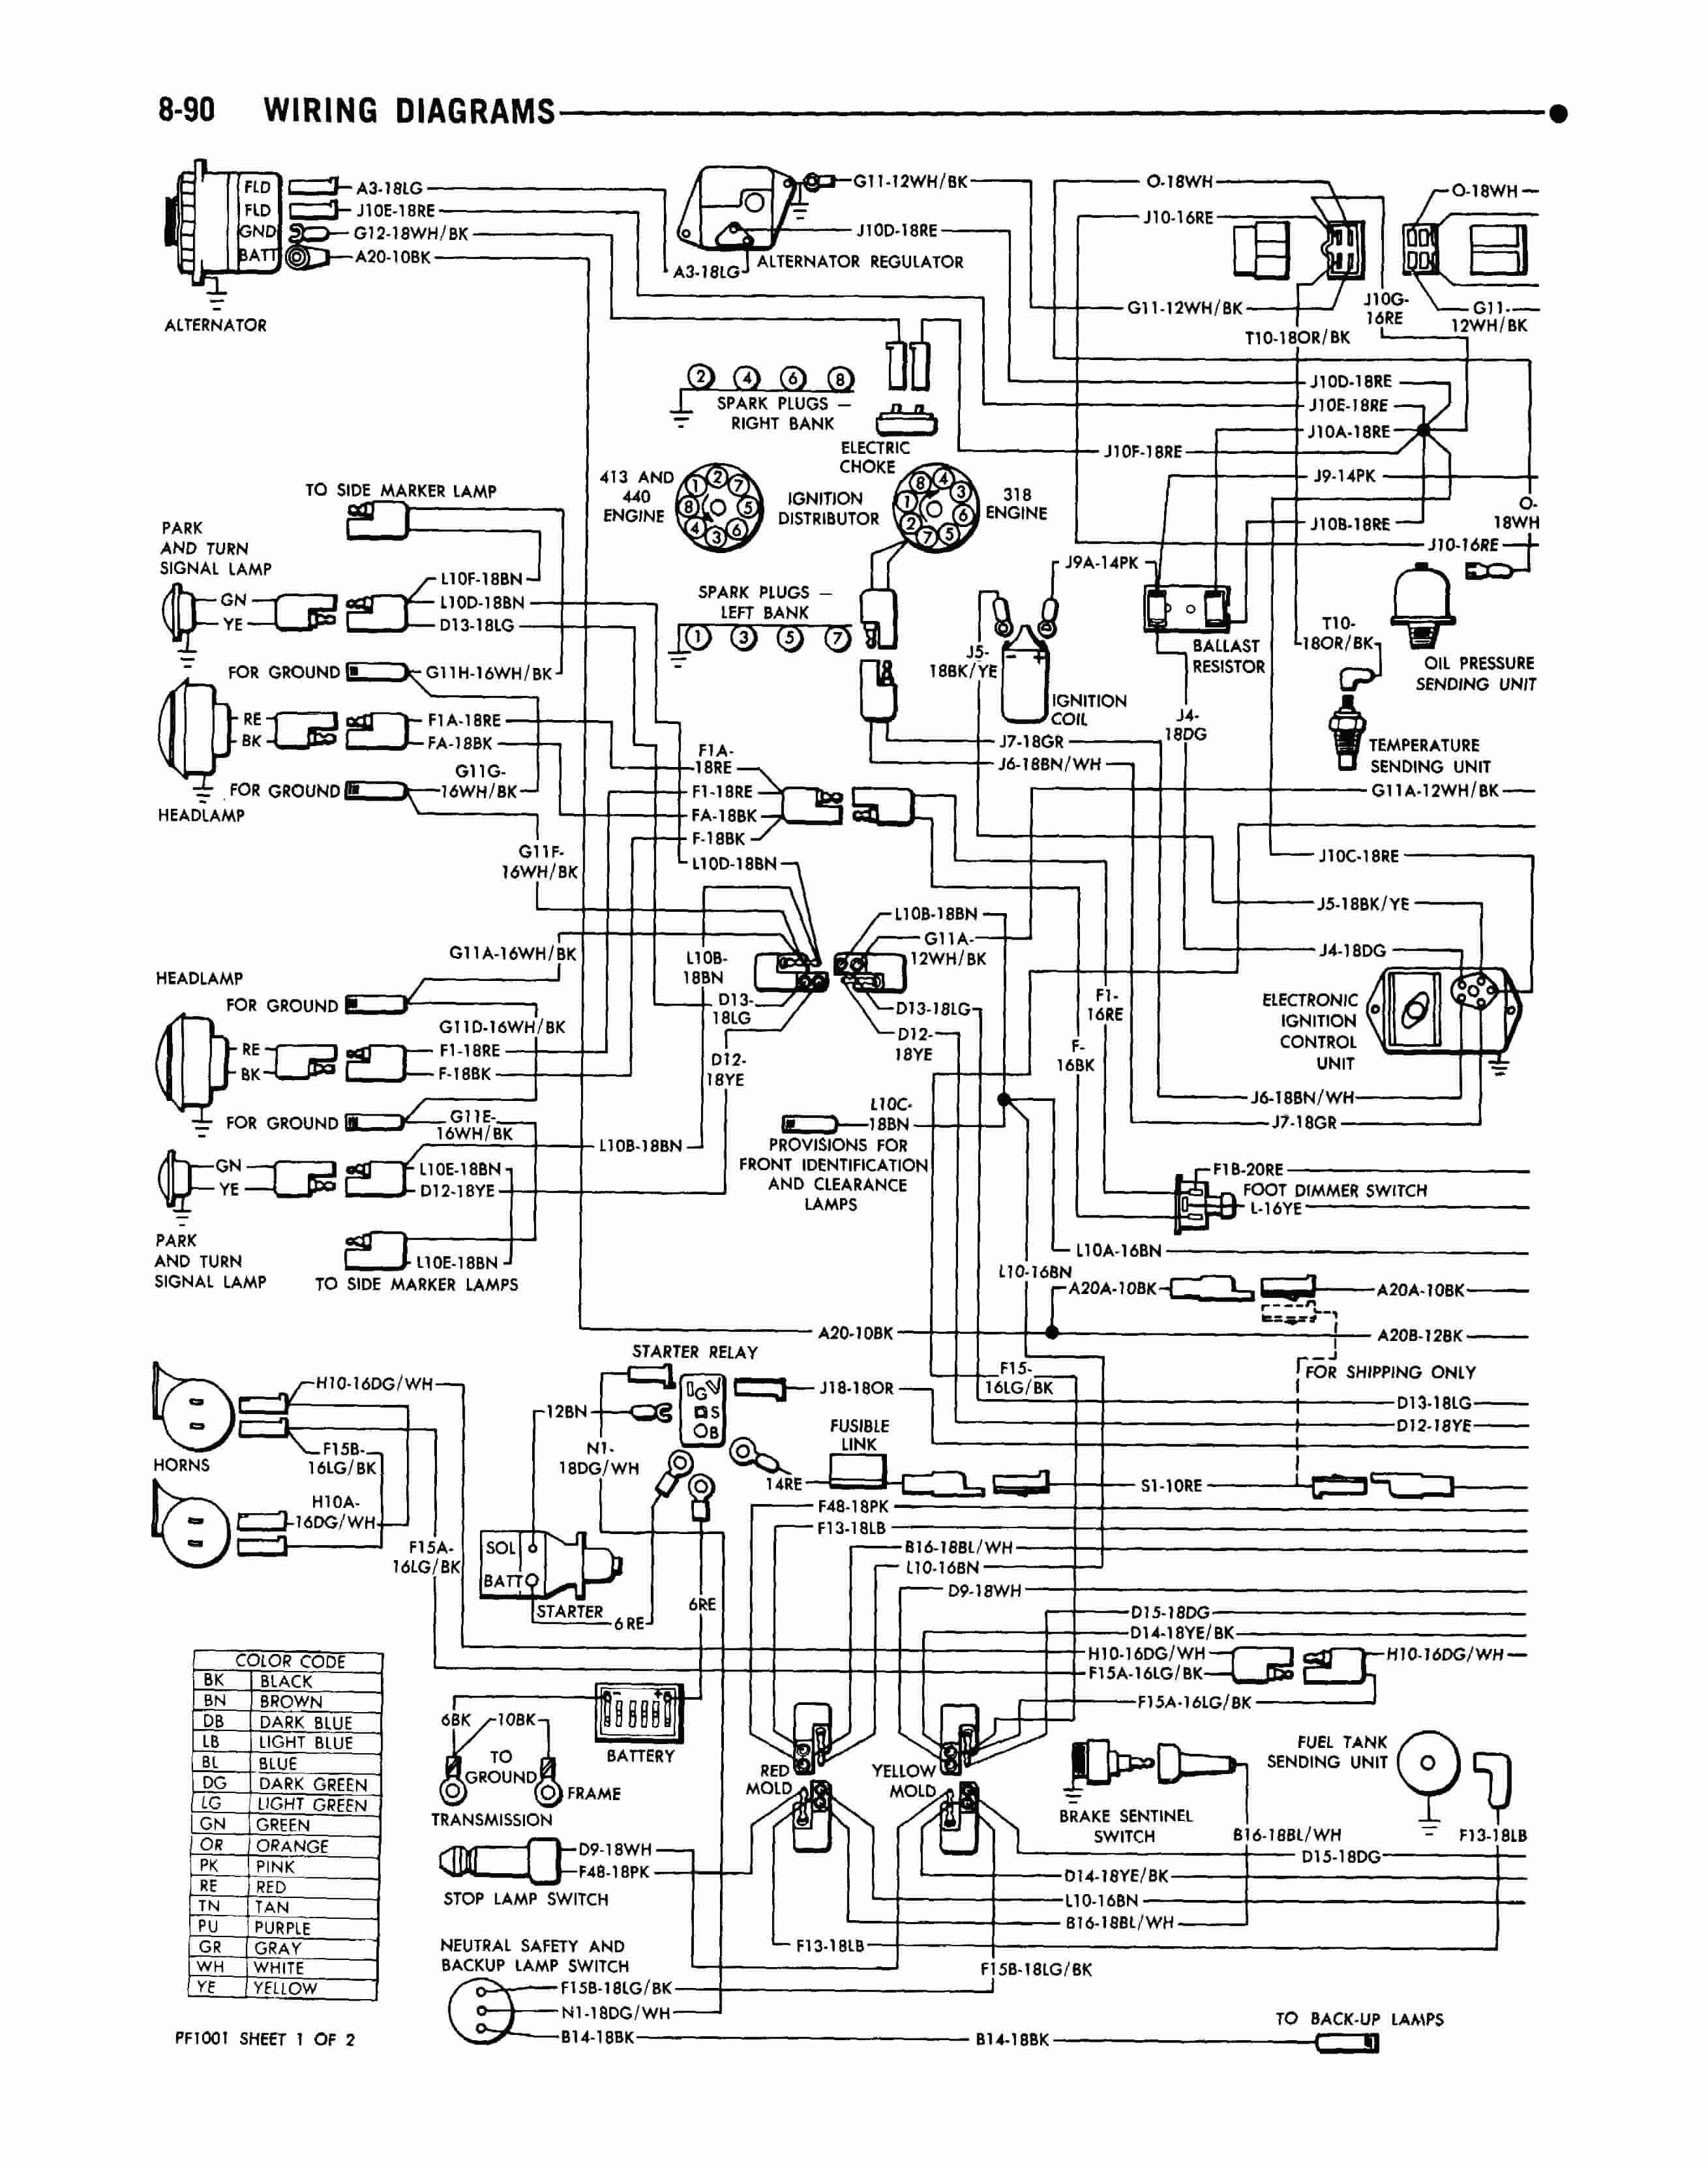 electricals u002761 u002771 dodge truck website61wire jpg wiring diagram for 1961 dodge light